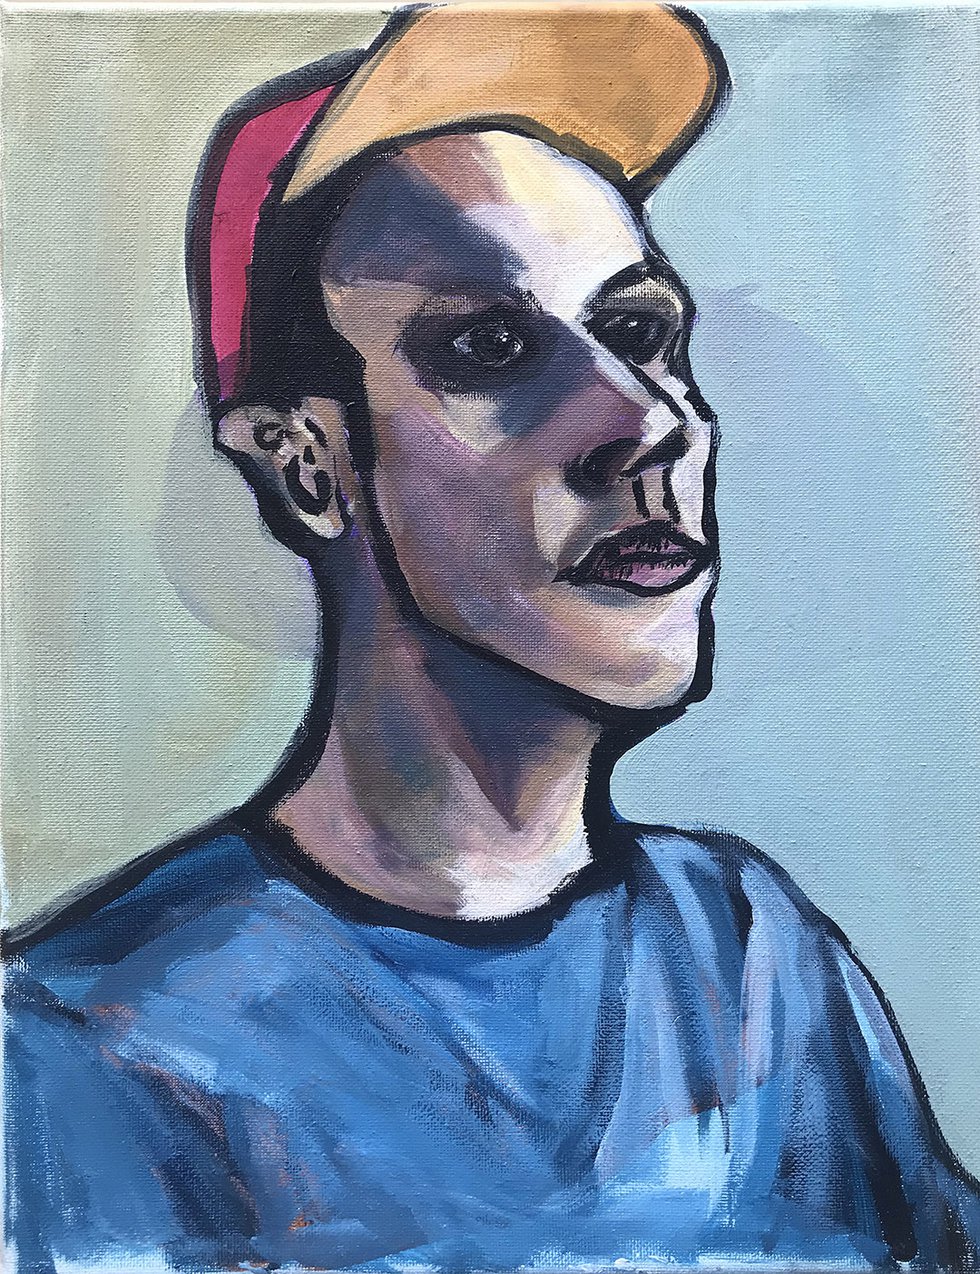 Bryan Cathcart, "Self-Portrait," 2020